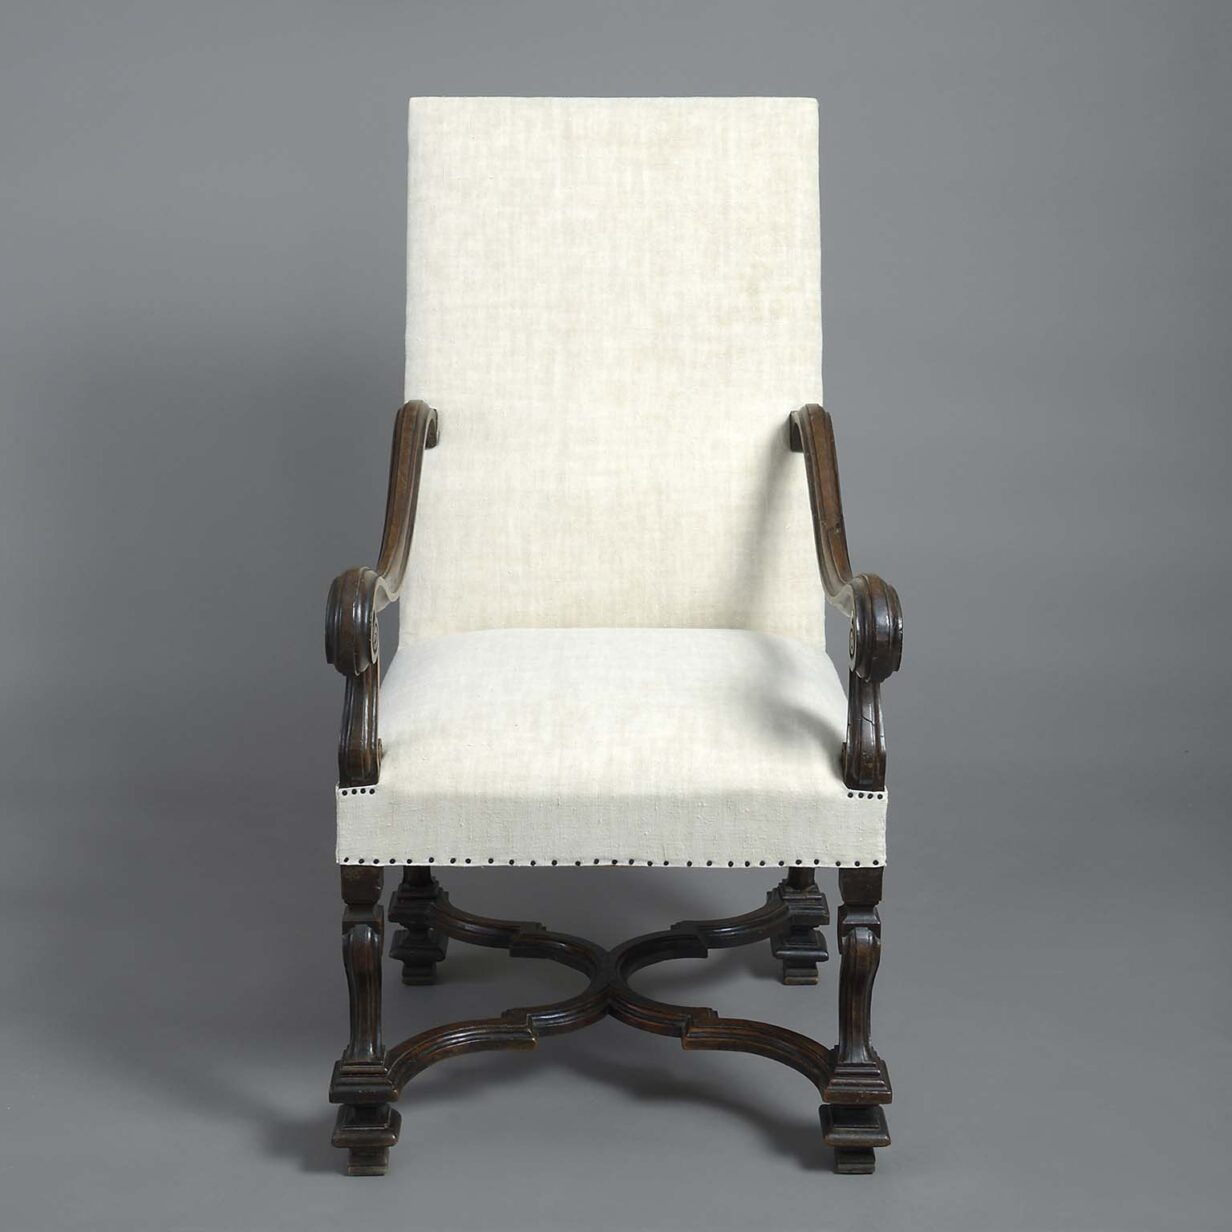 Early 18th century walnut armchair